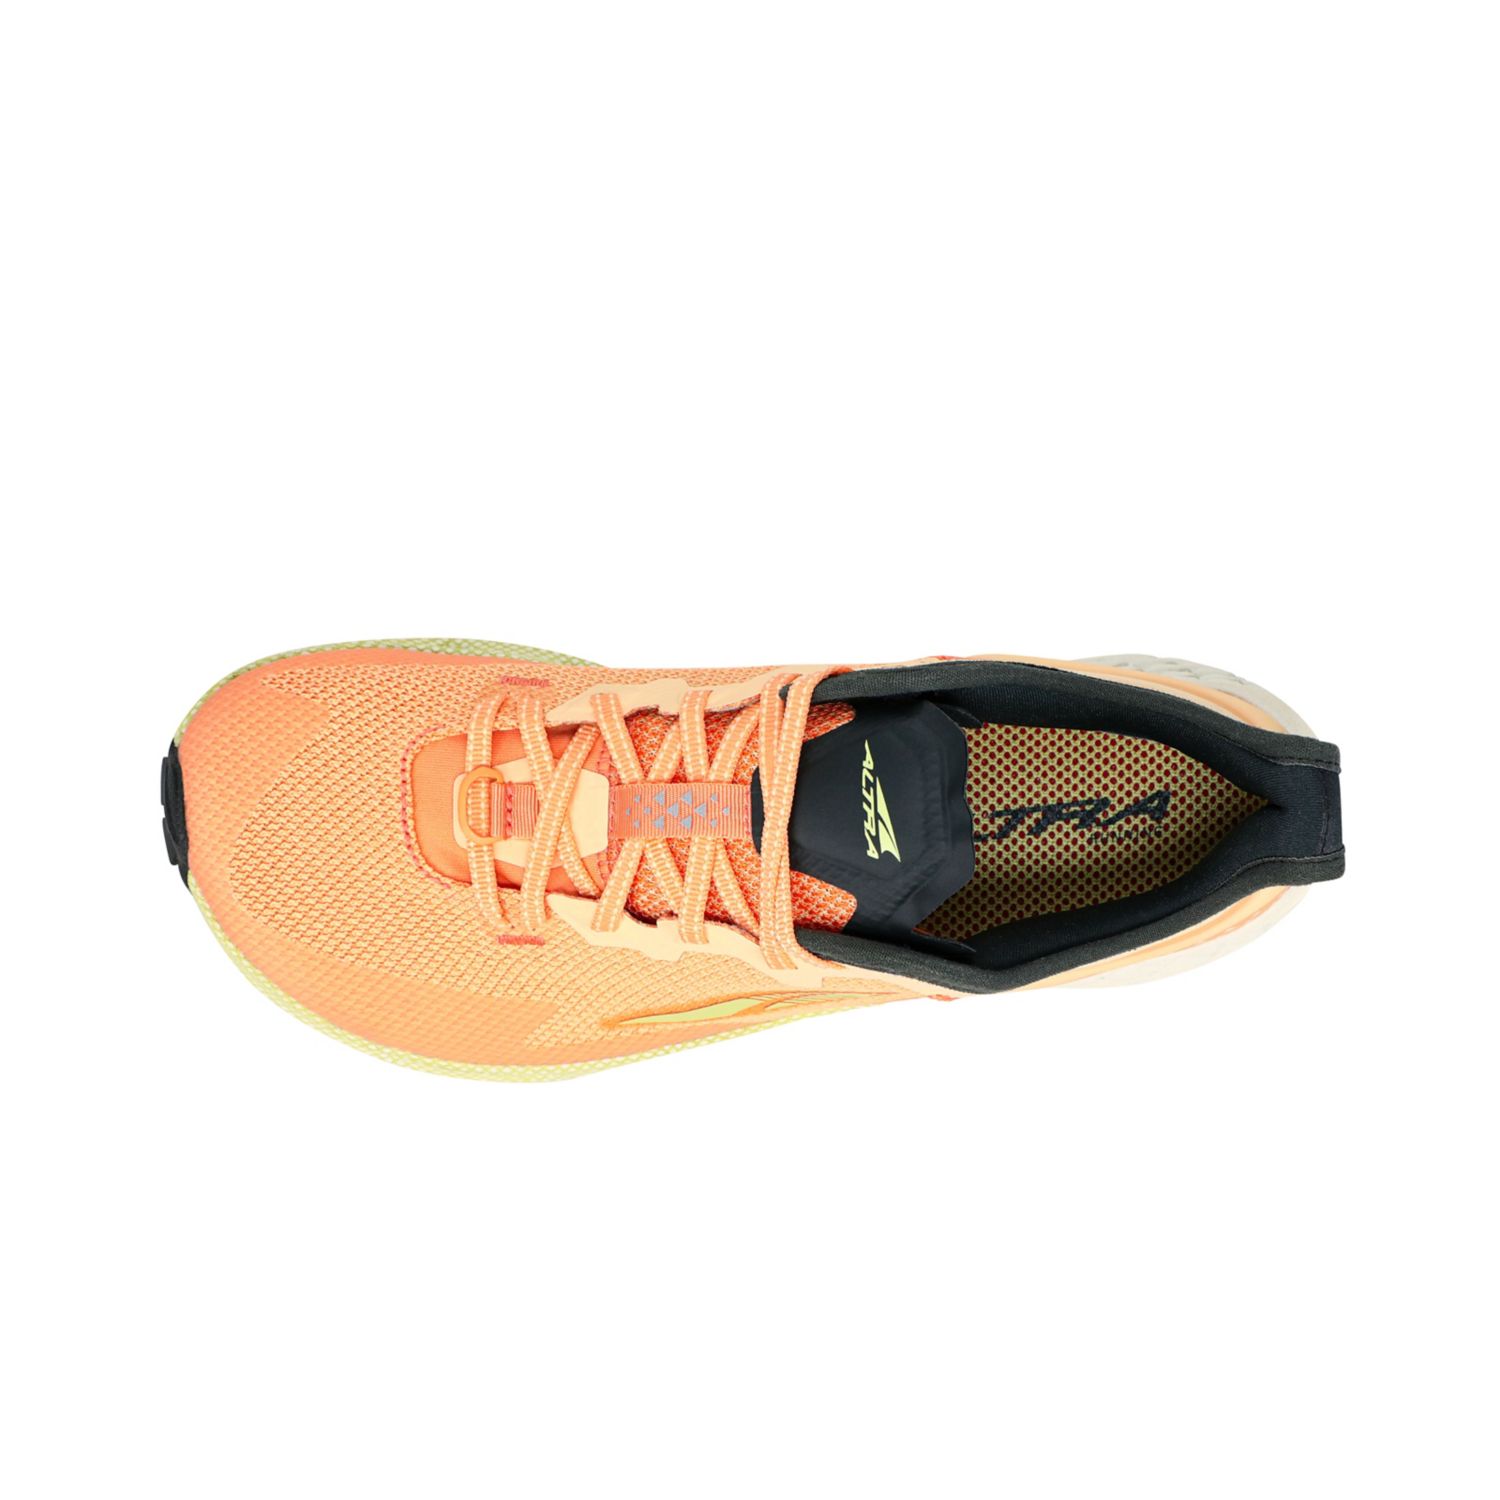 Orange / Black Altra Timp 4 Women's Trail Running Shoes | Ireland-19032579